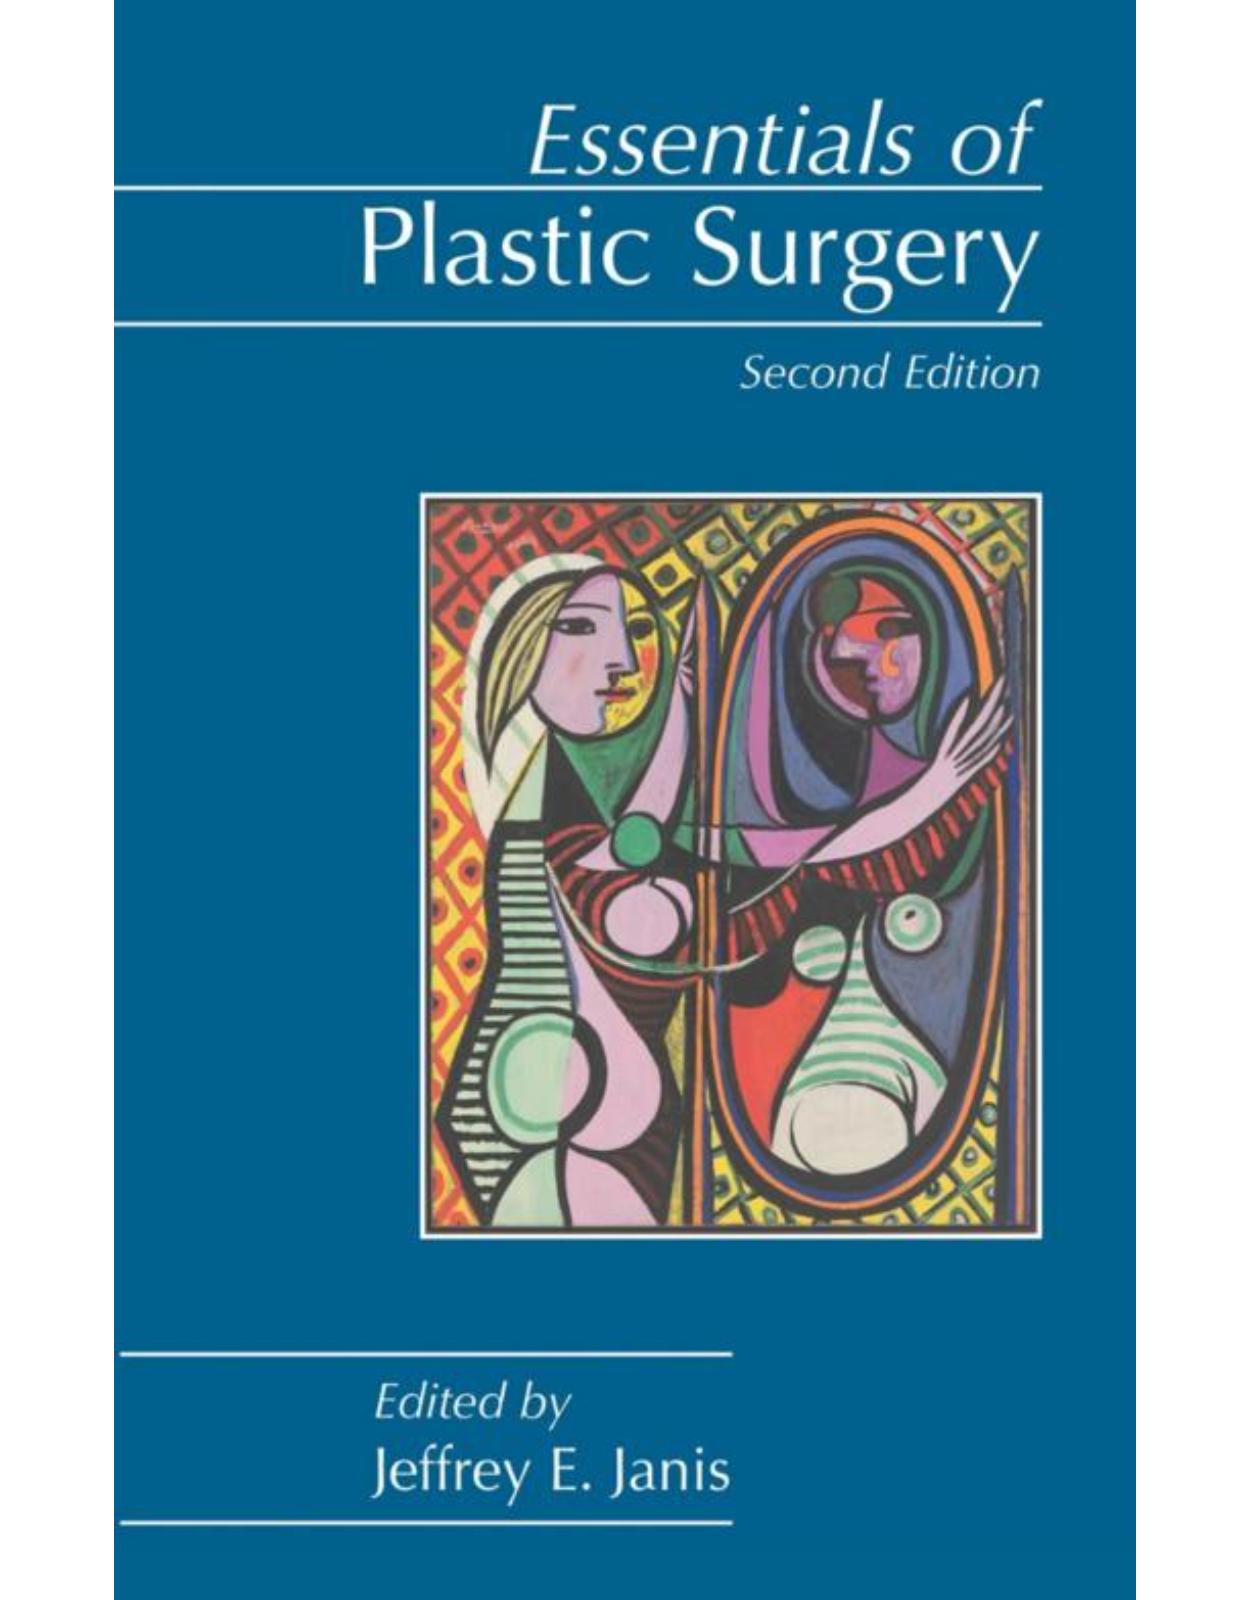 Essentials of Plastic Surgery, Second Edition